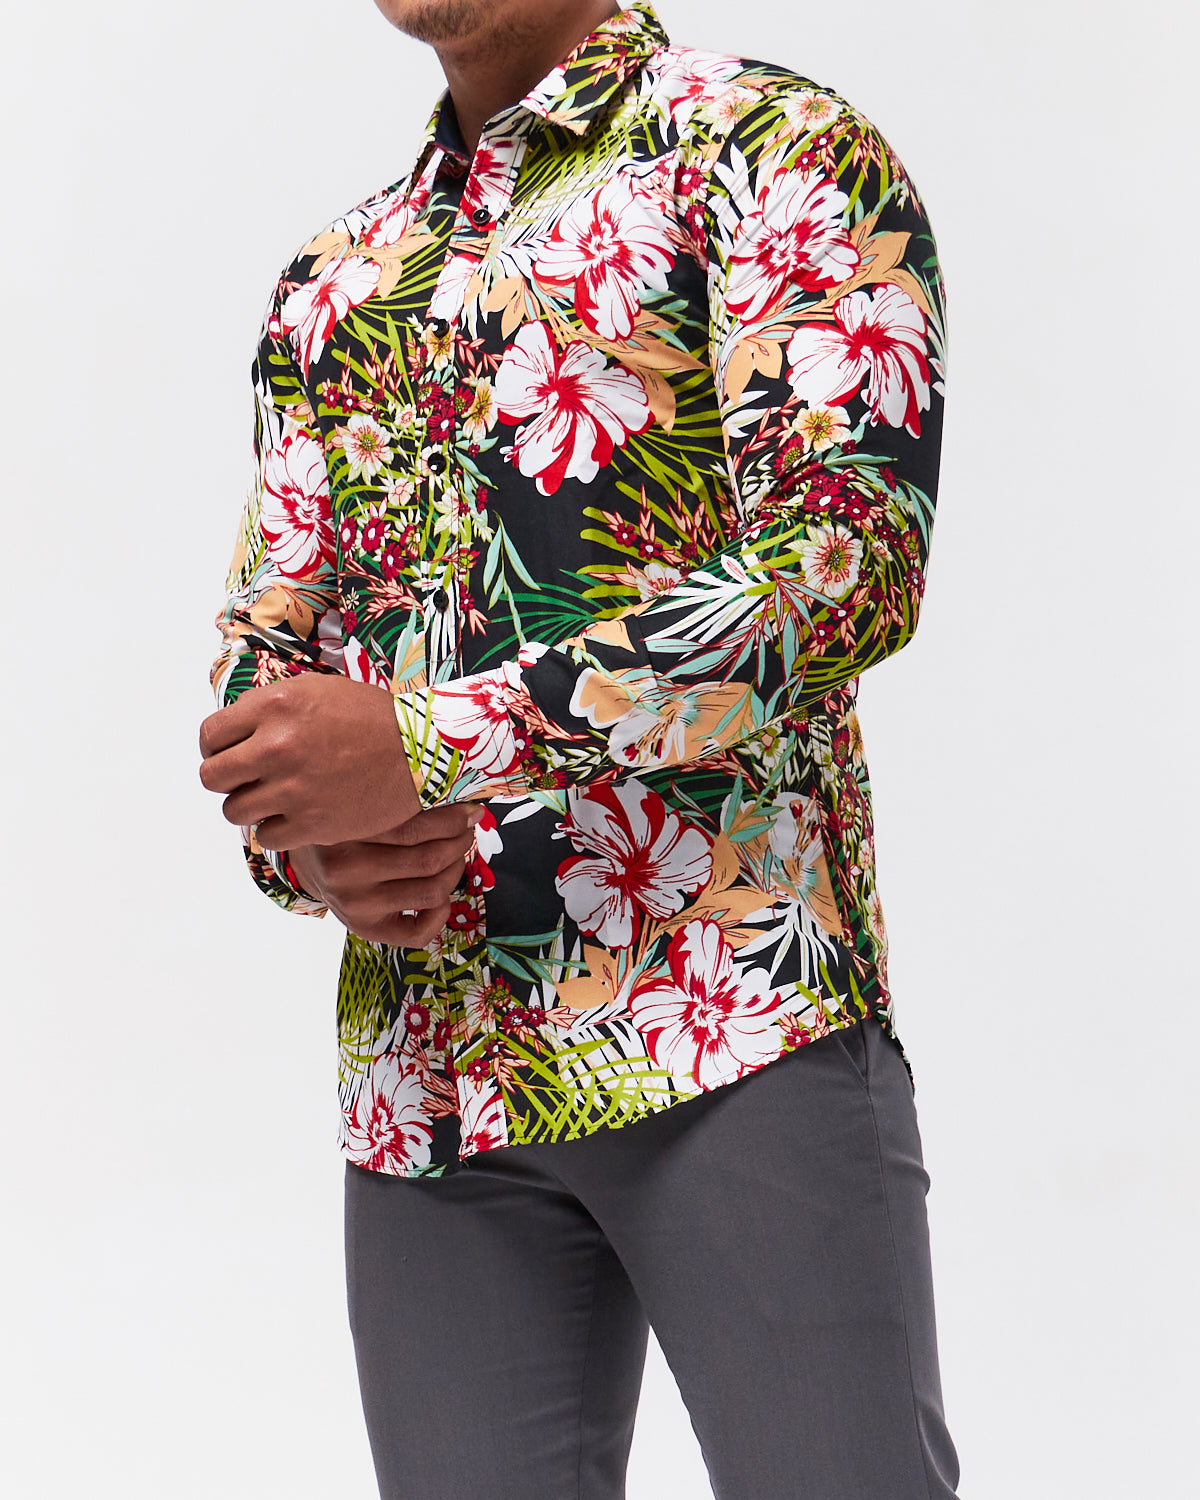 Floral Printed Men Shirt Long Sleeve 21.90